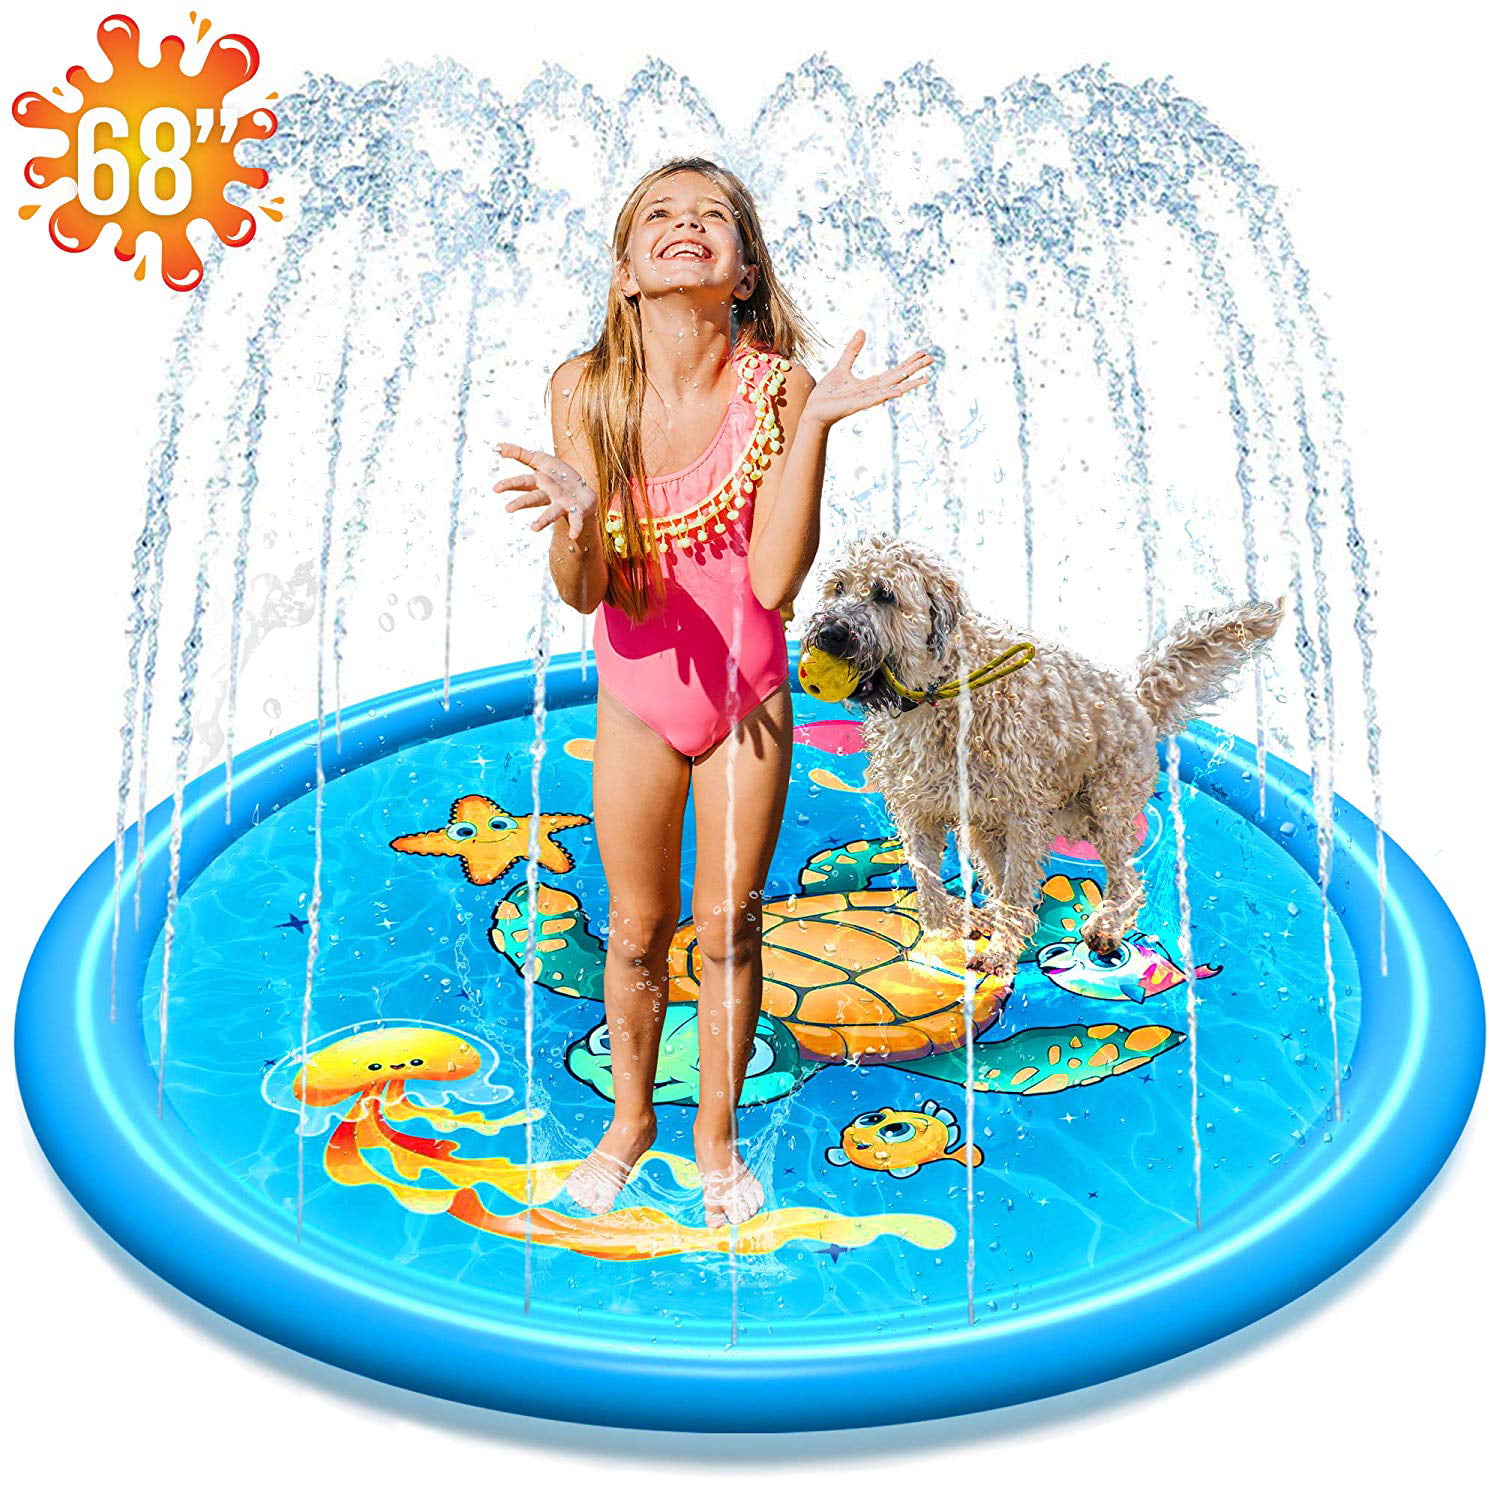 68" Splash Pad Sprinkler Play Mat for Kids Toddlers Dog Outdoor Pool Summer Toy 